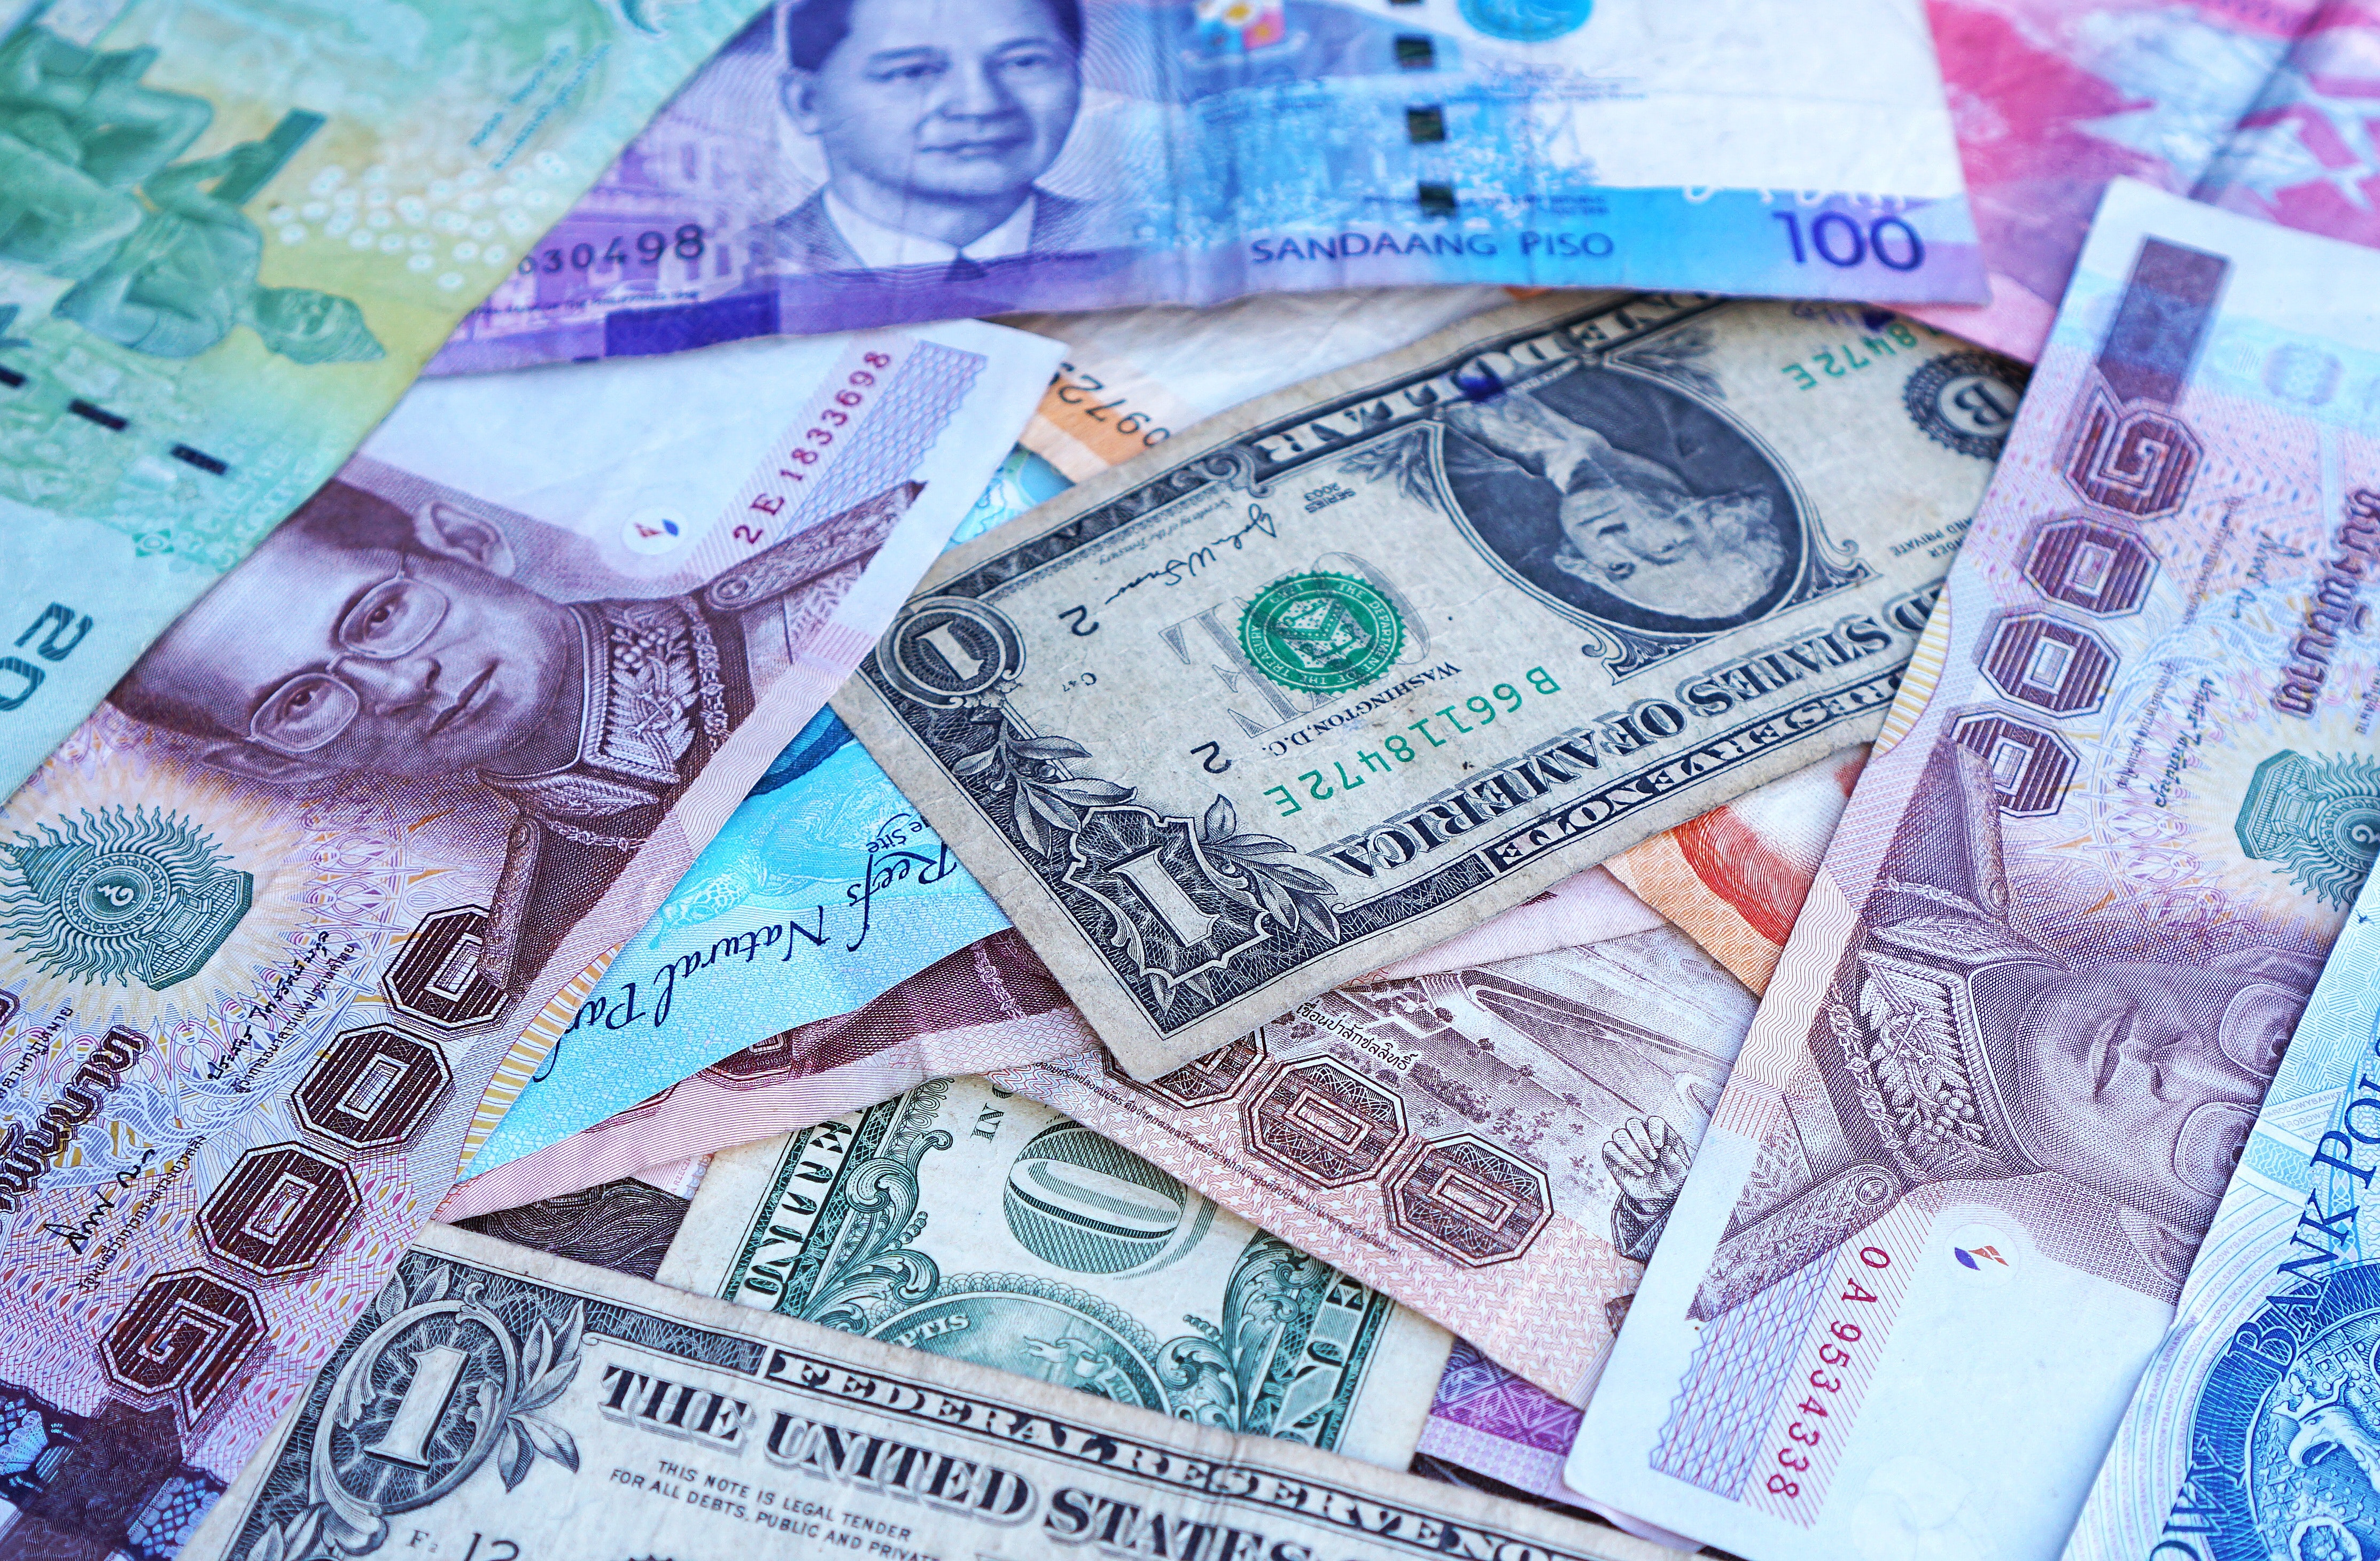 Paper bills and bank notes, USD dollars, Yen, Euro